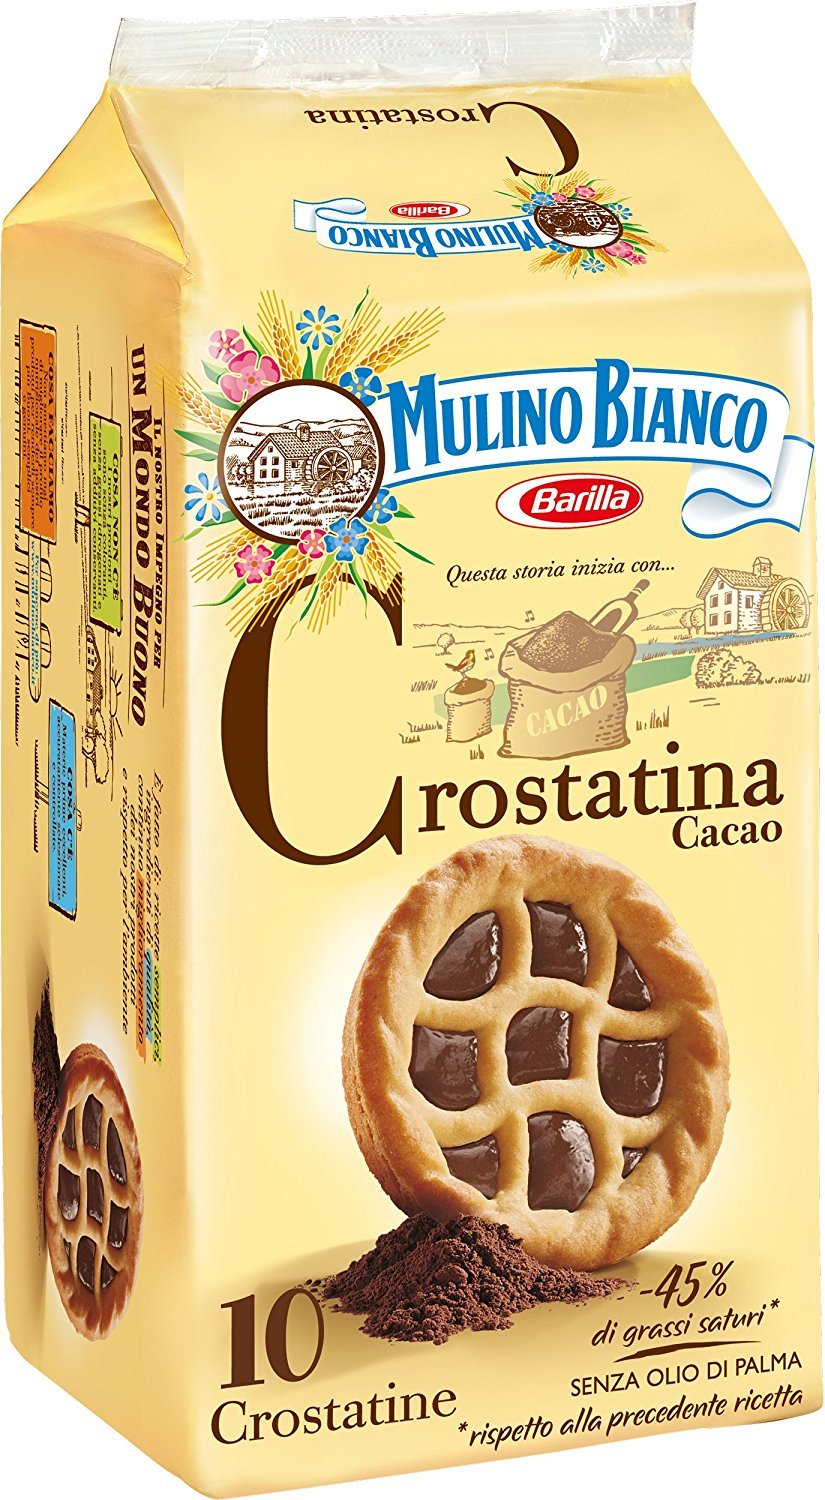 Mulino Bianco Crostatina Cacao, 400g (10 pcs)